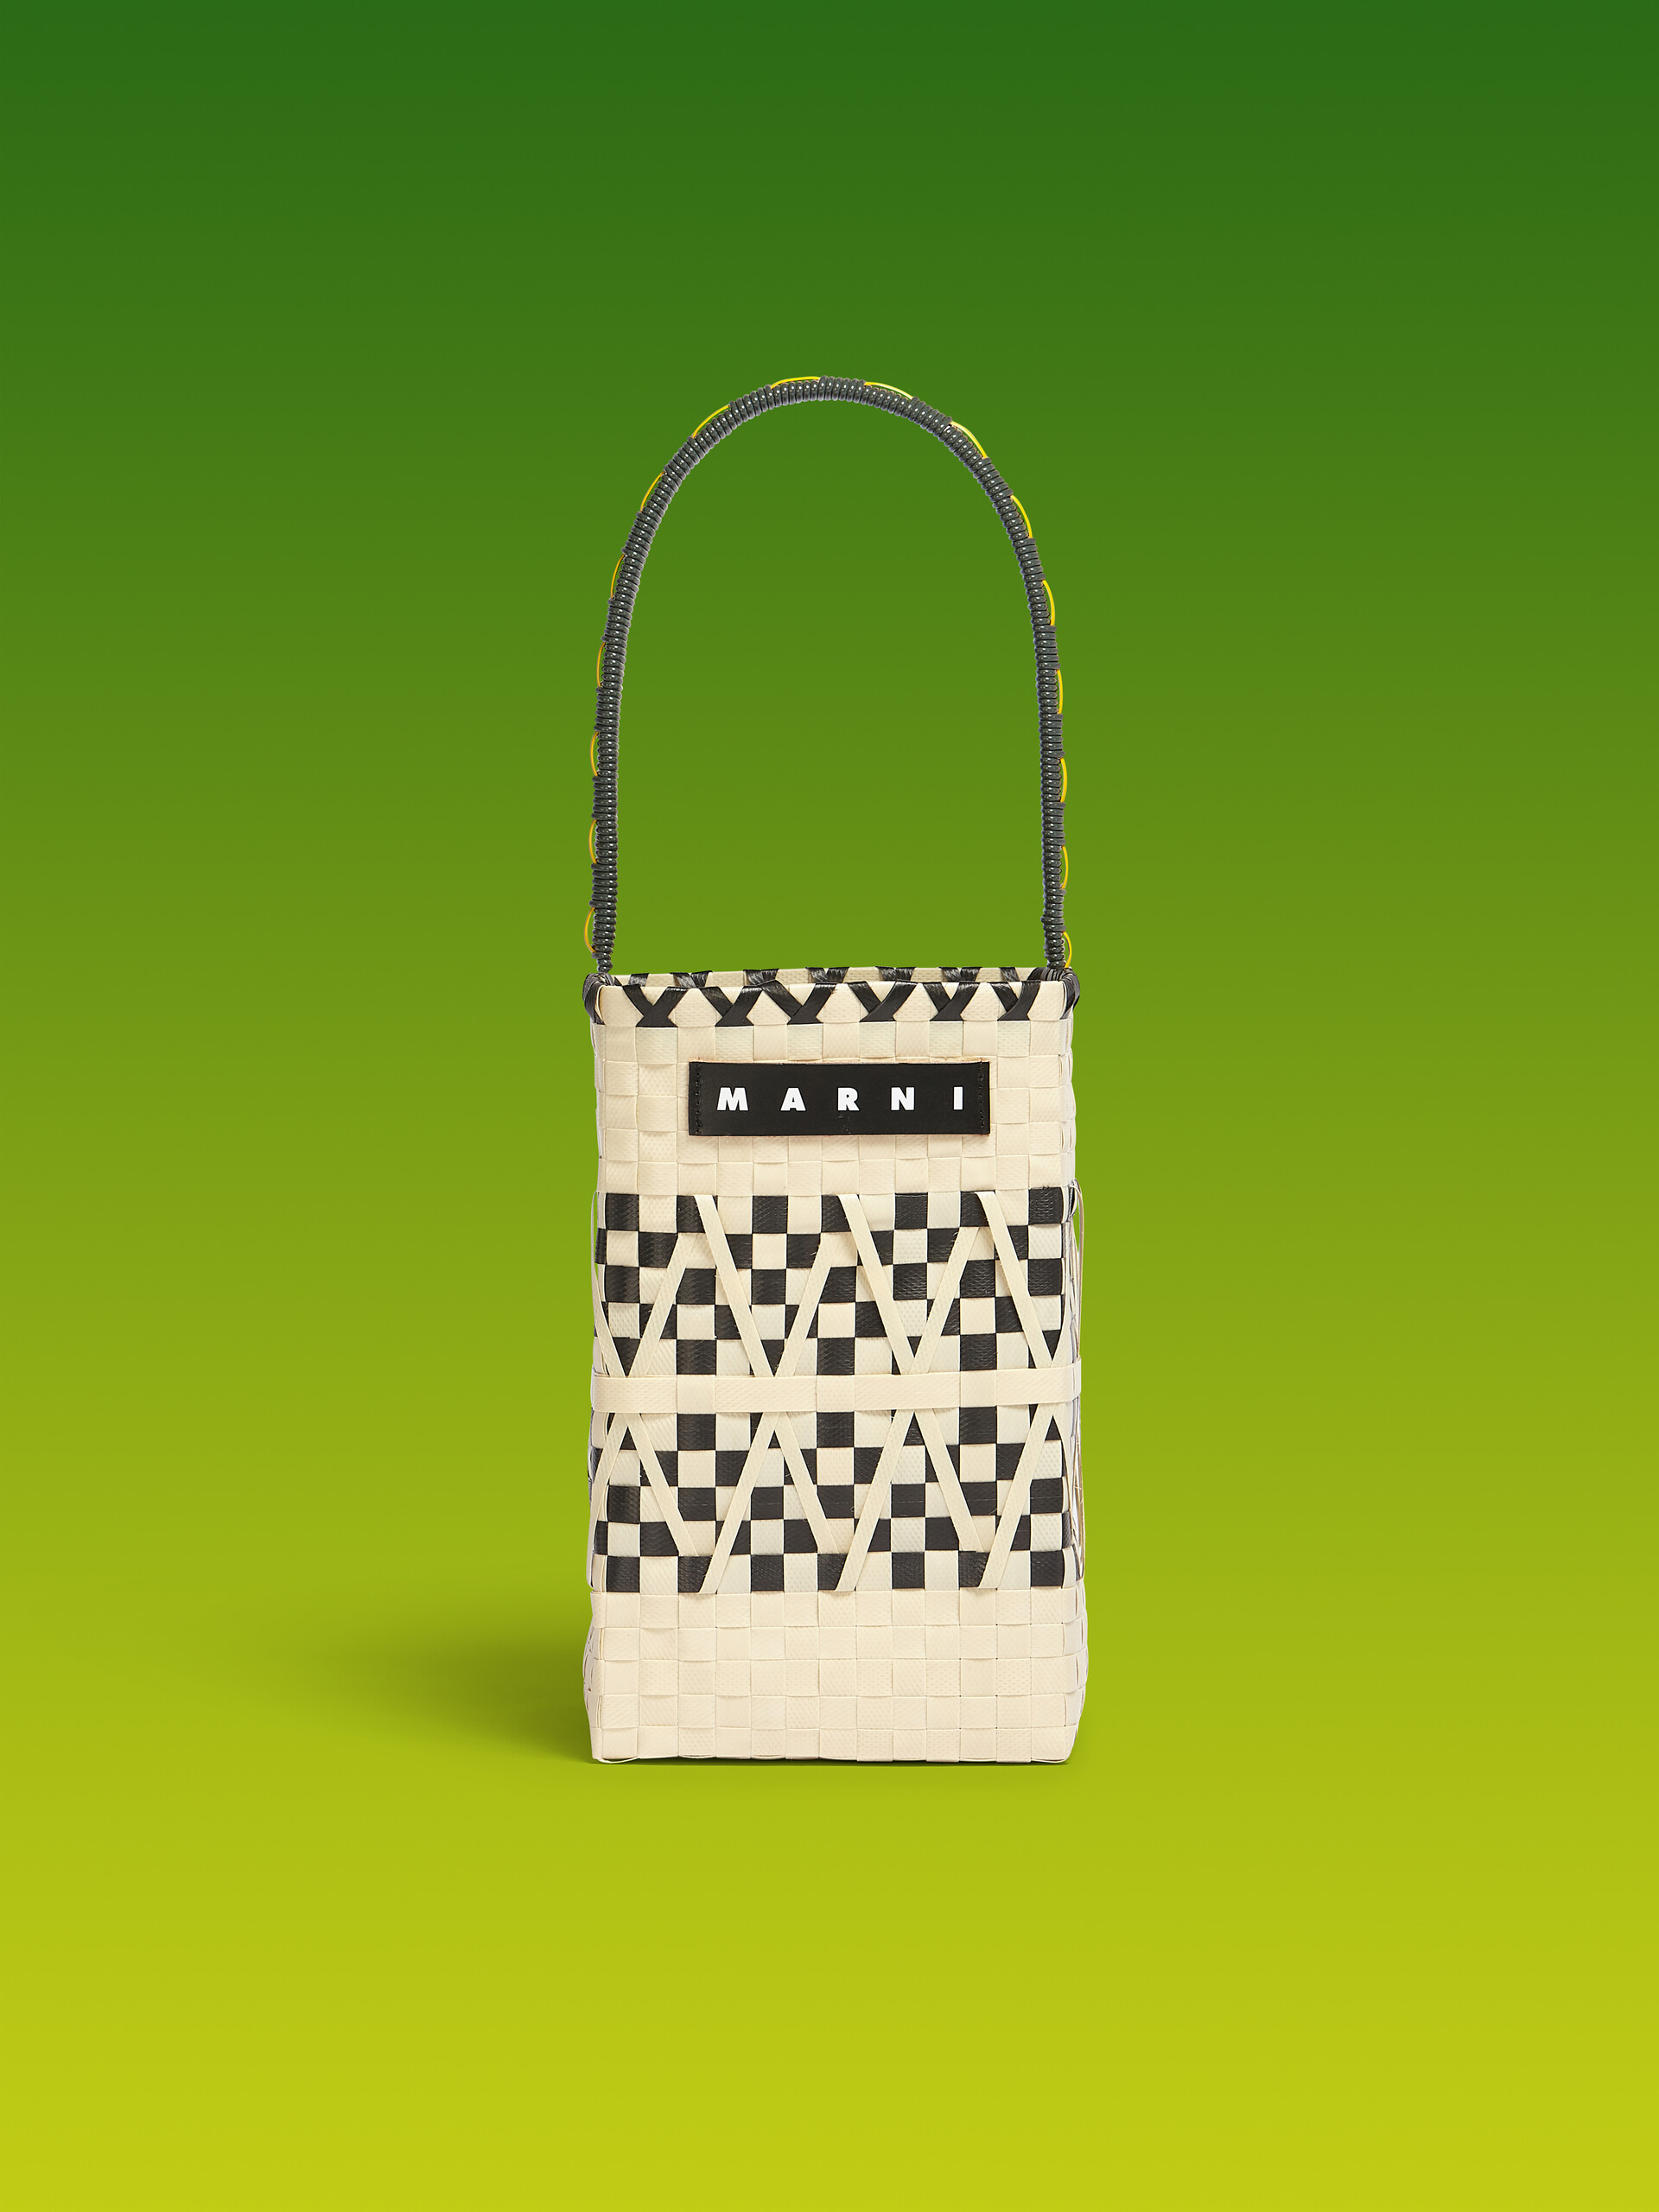 MARNI MARKET STENCIL white and black bucket bag - Shopping Bags - Image 1